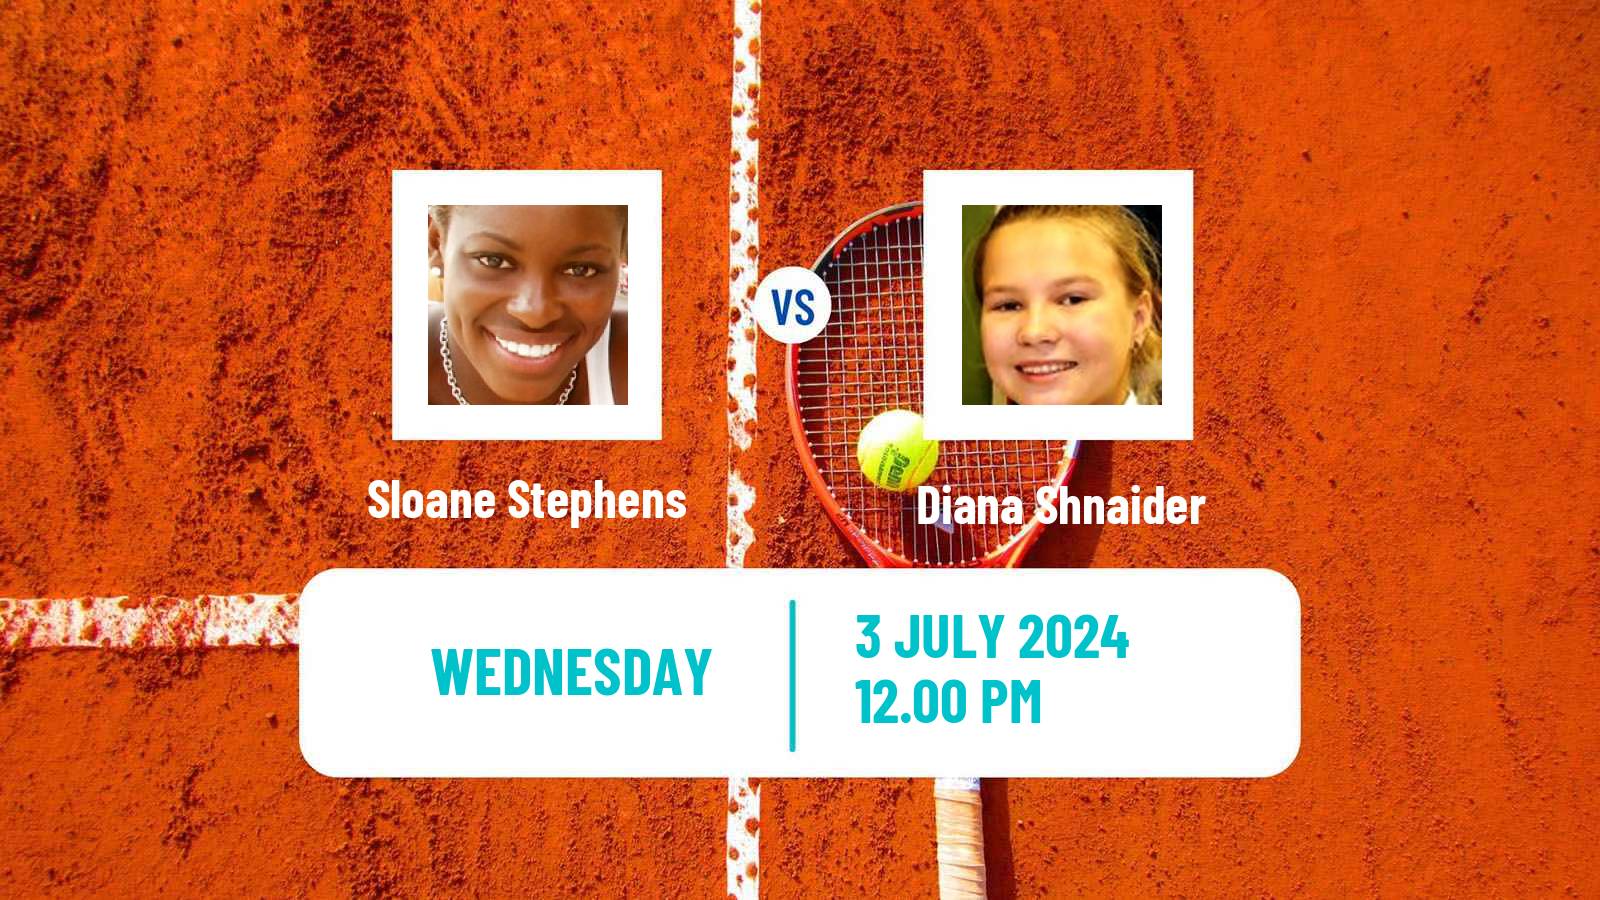 Tennis WTA Wimbledon Sloane Stephens - Diana Shnaider